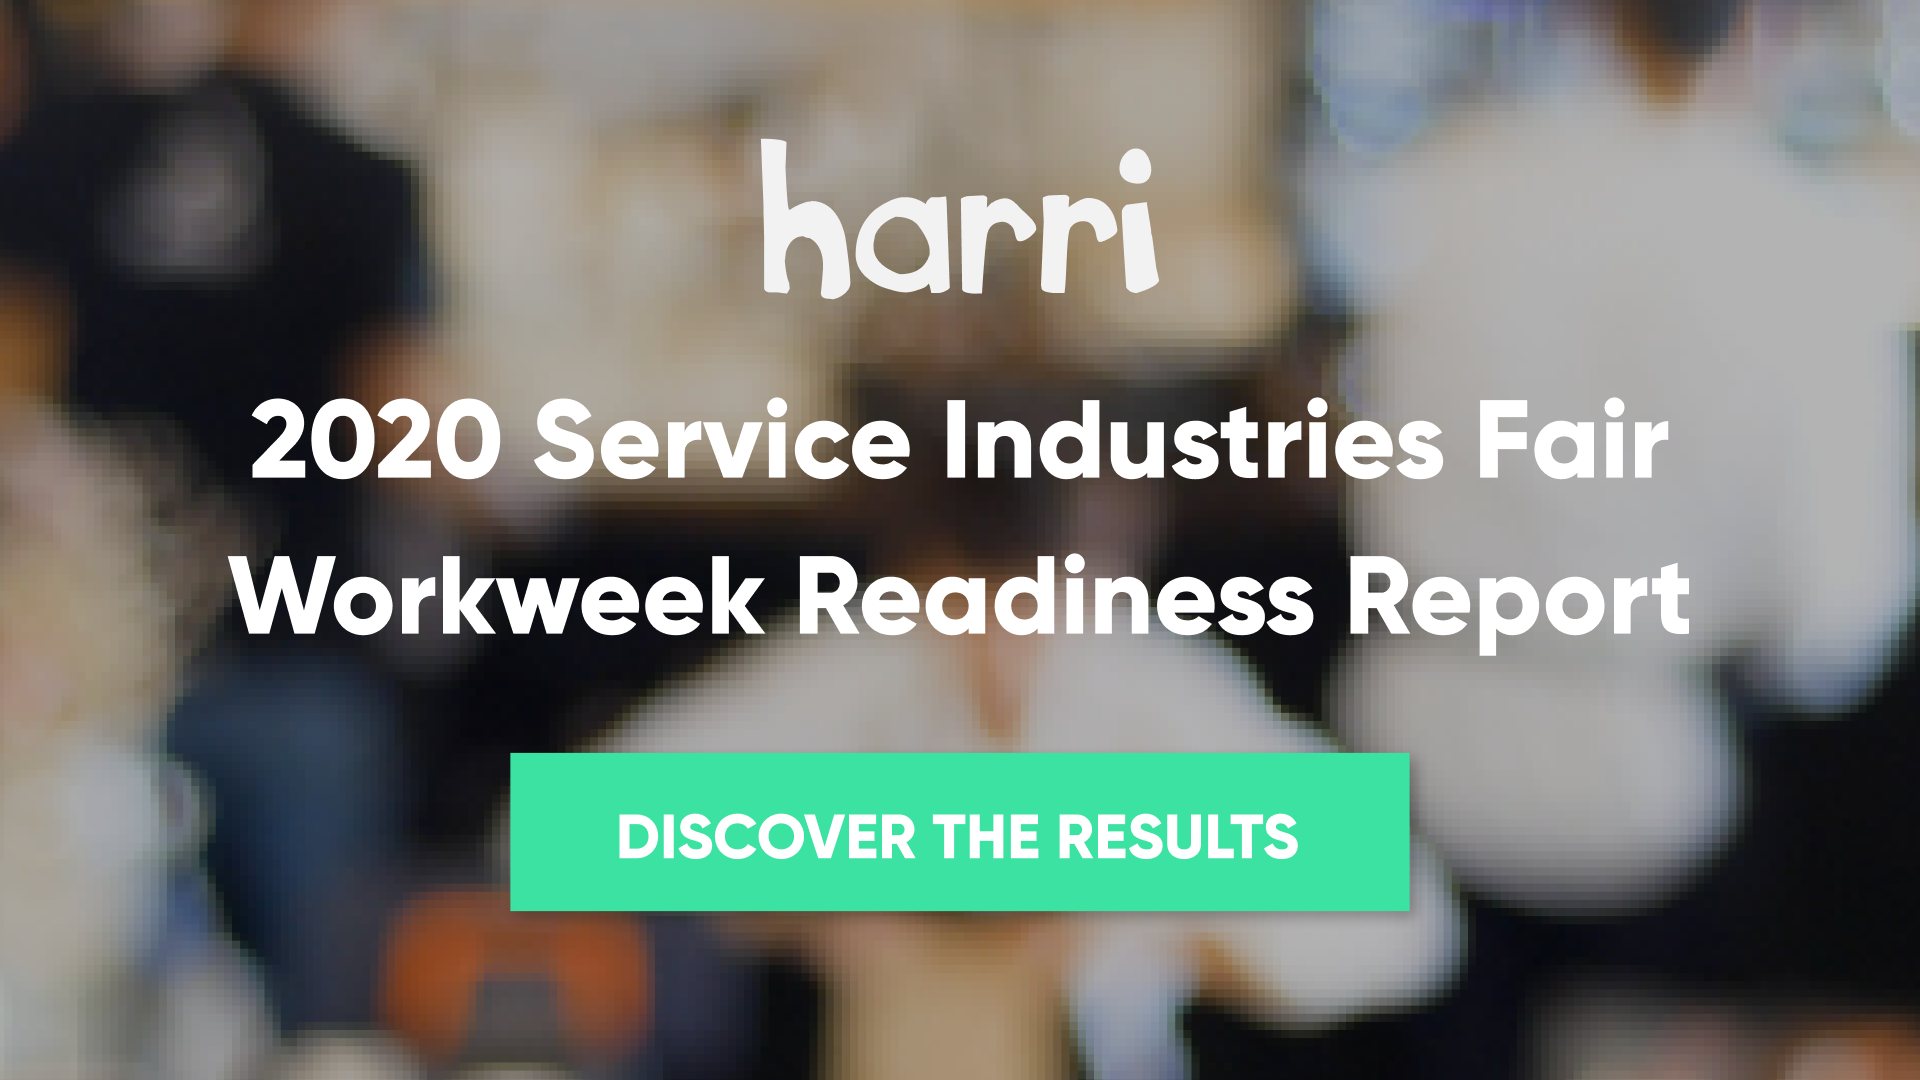 Fair Workweek data 2020 readiness report